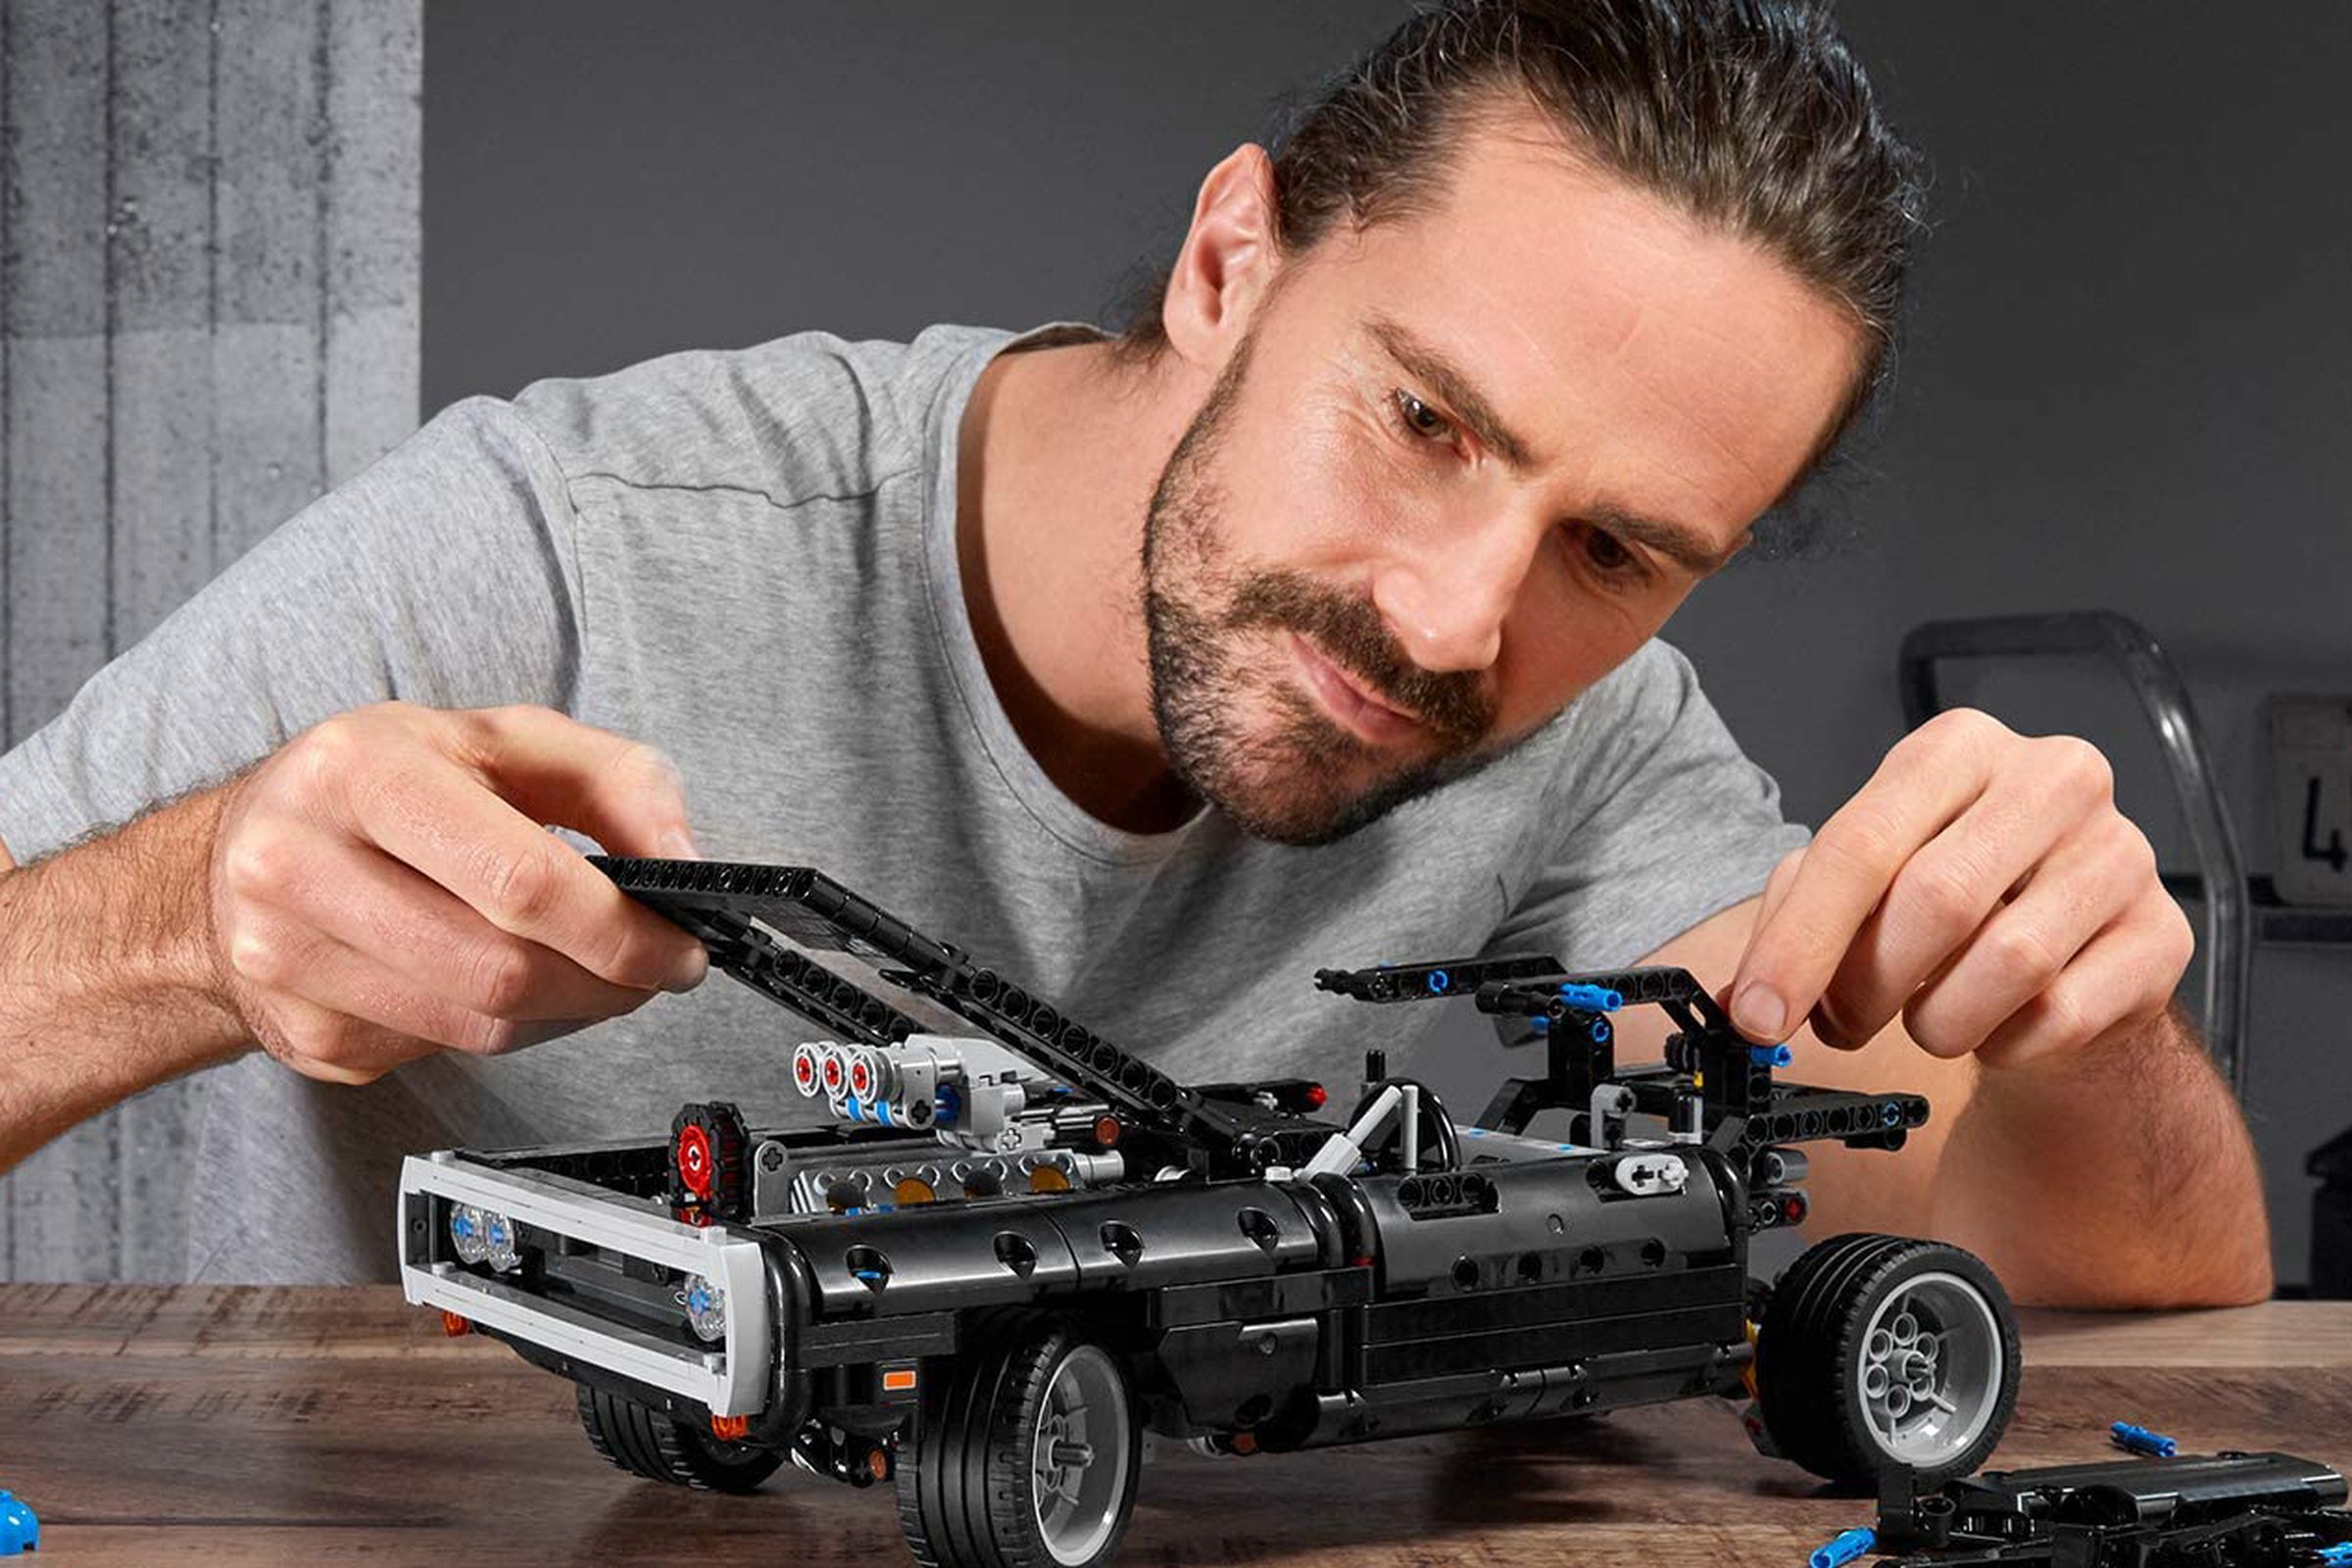 A photo of a person assembling a Lego Technics